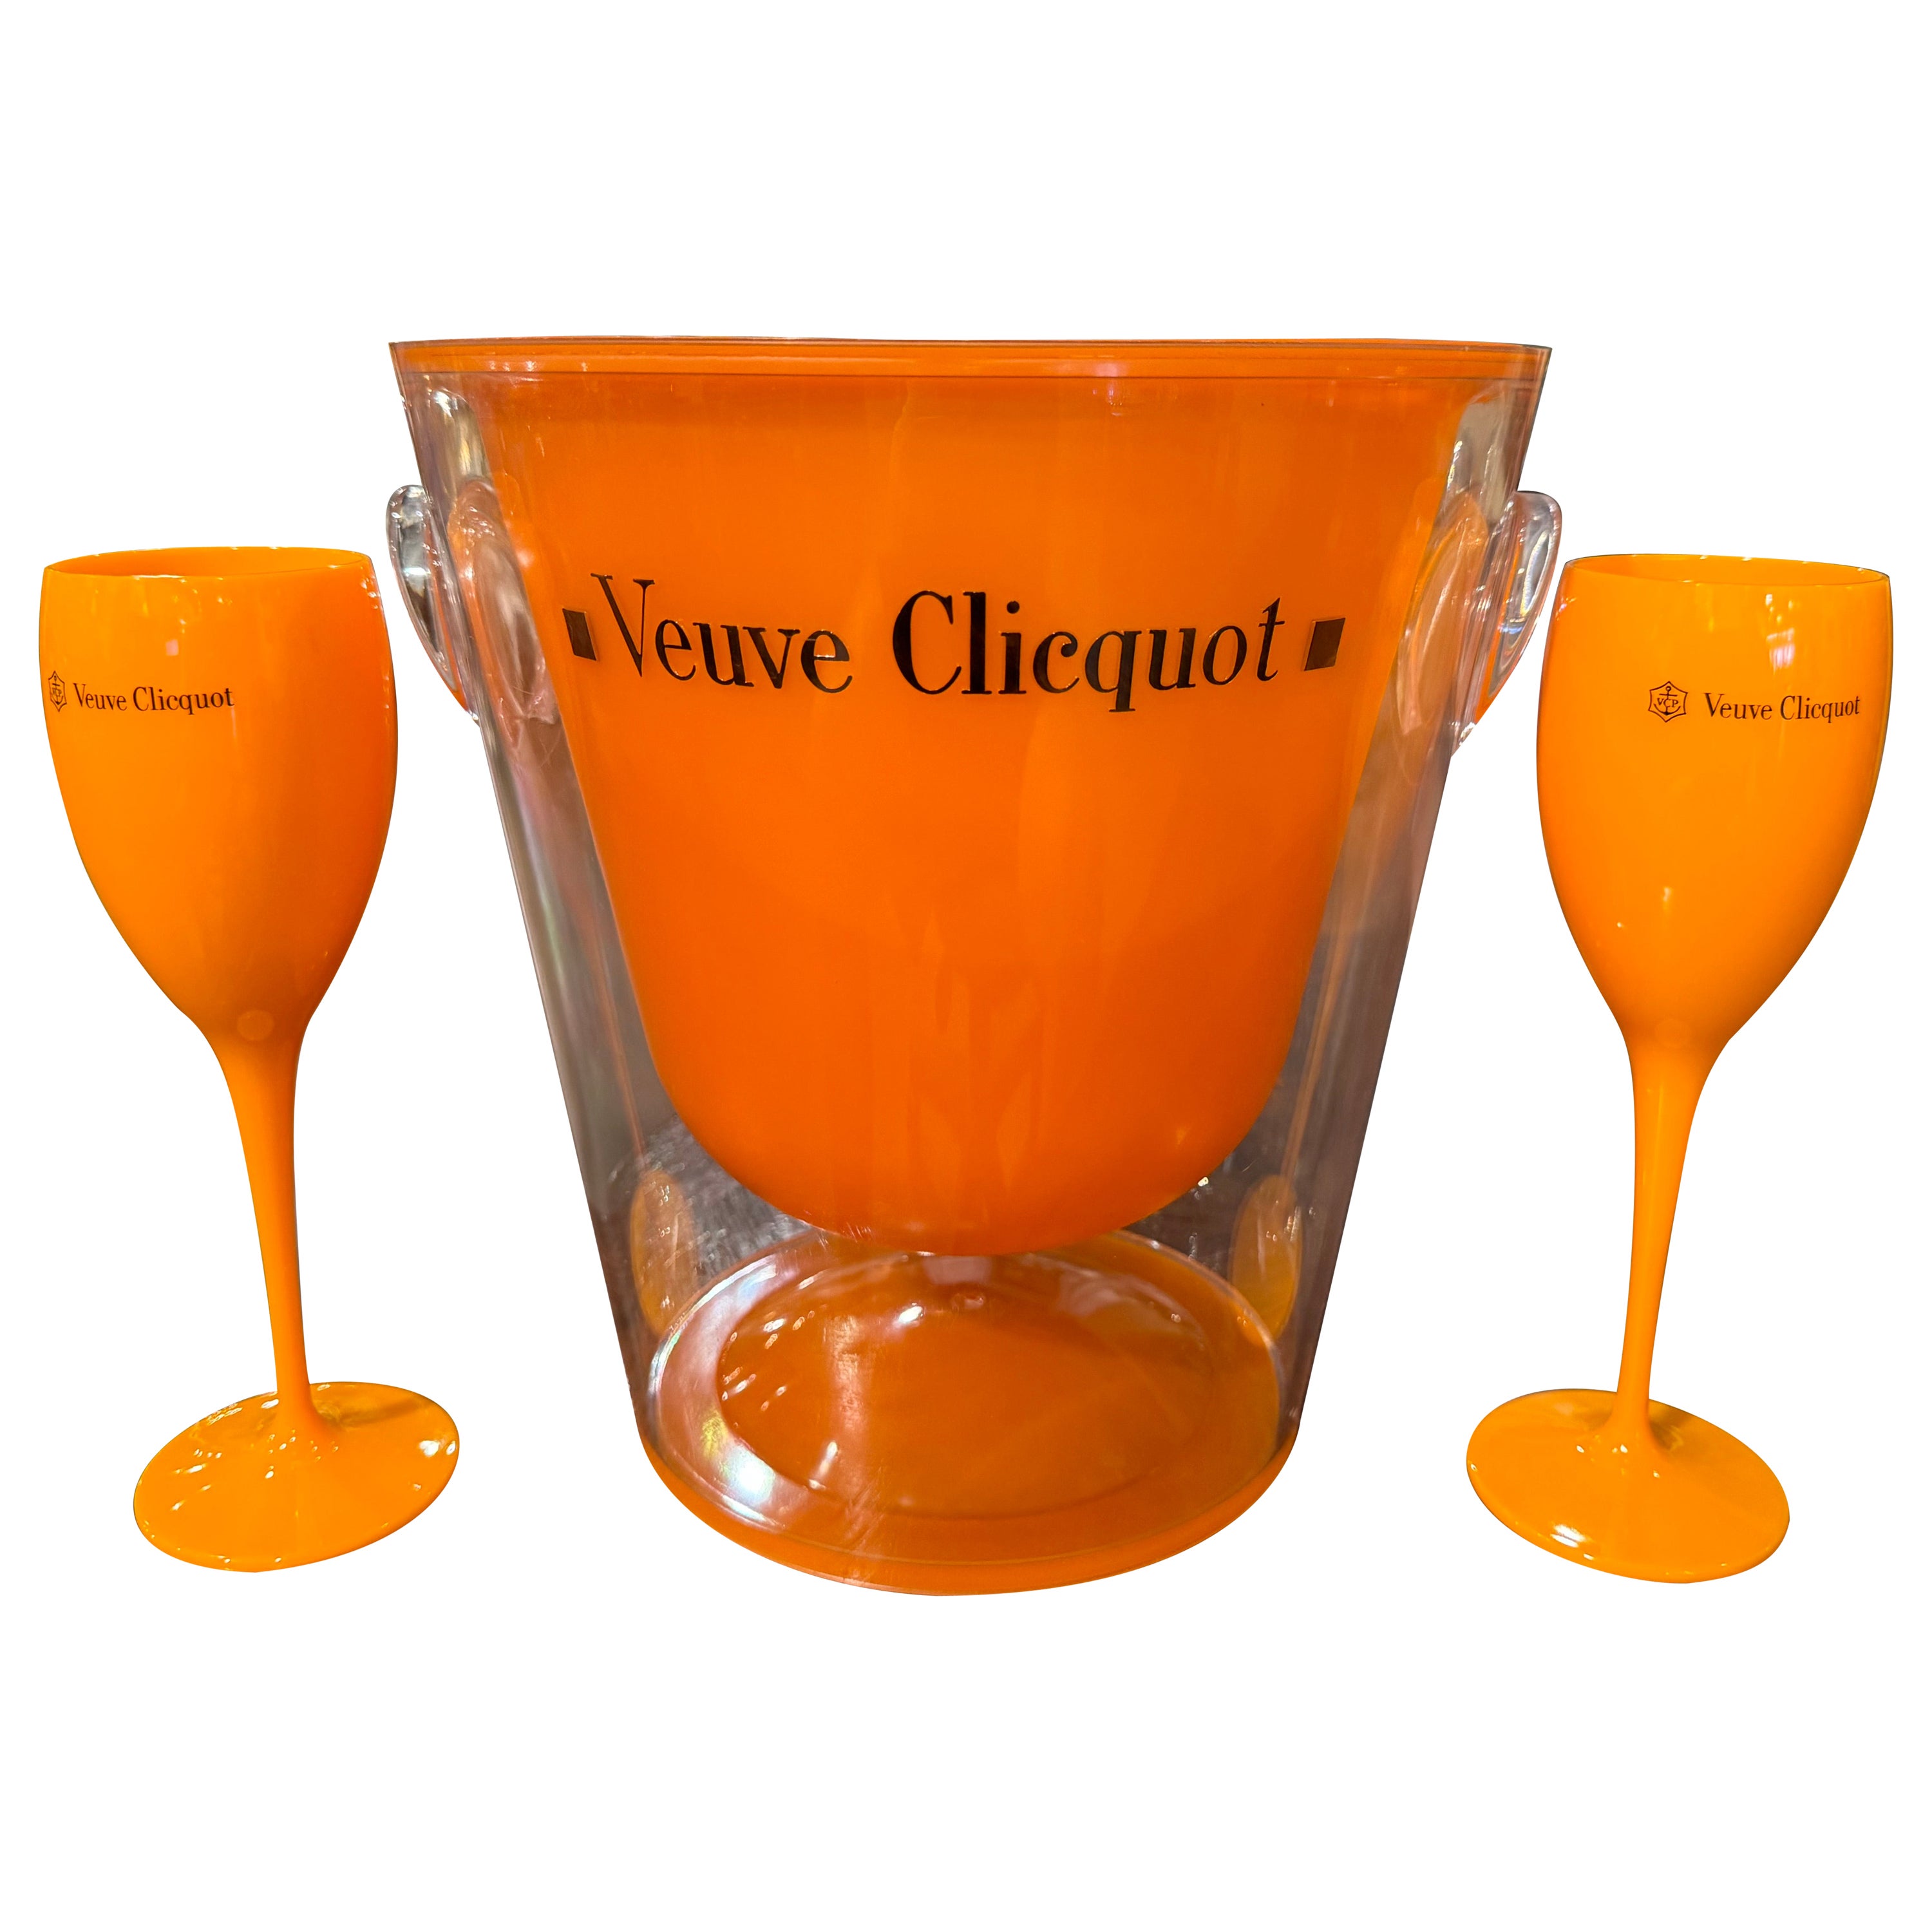 Veuve Clicquot Champagne Bottle Cooler, Paper Basket, Shopping Bag, Ice  Bucket, Flower Vase Yellow Design